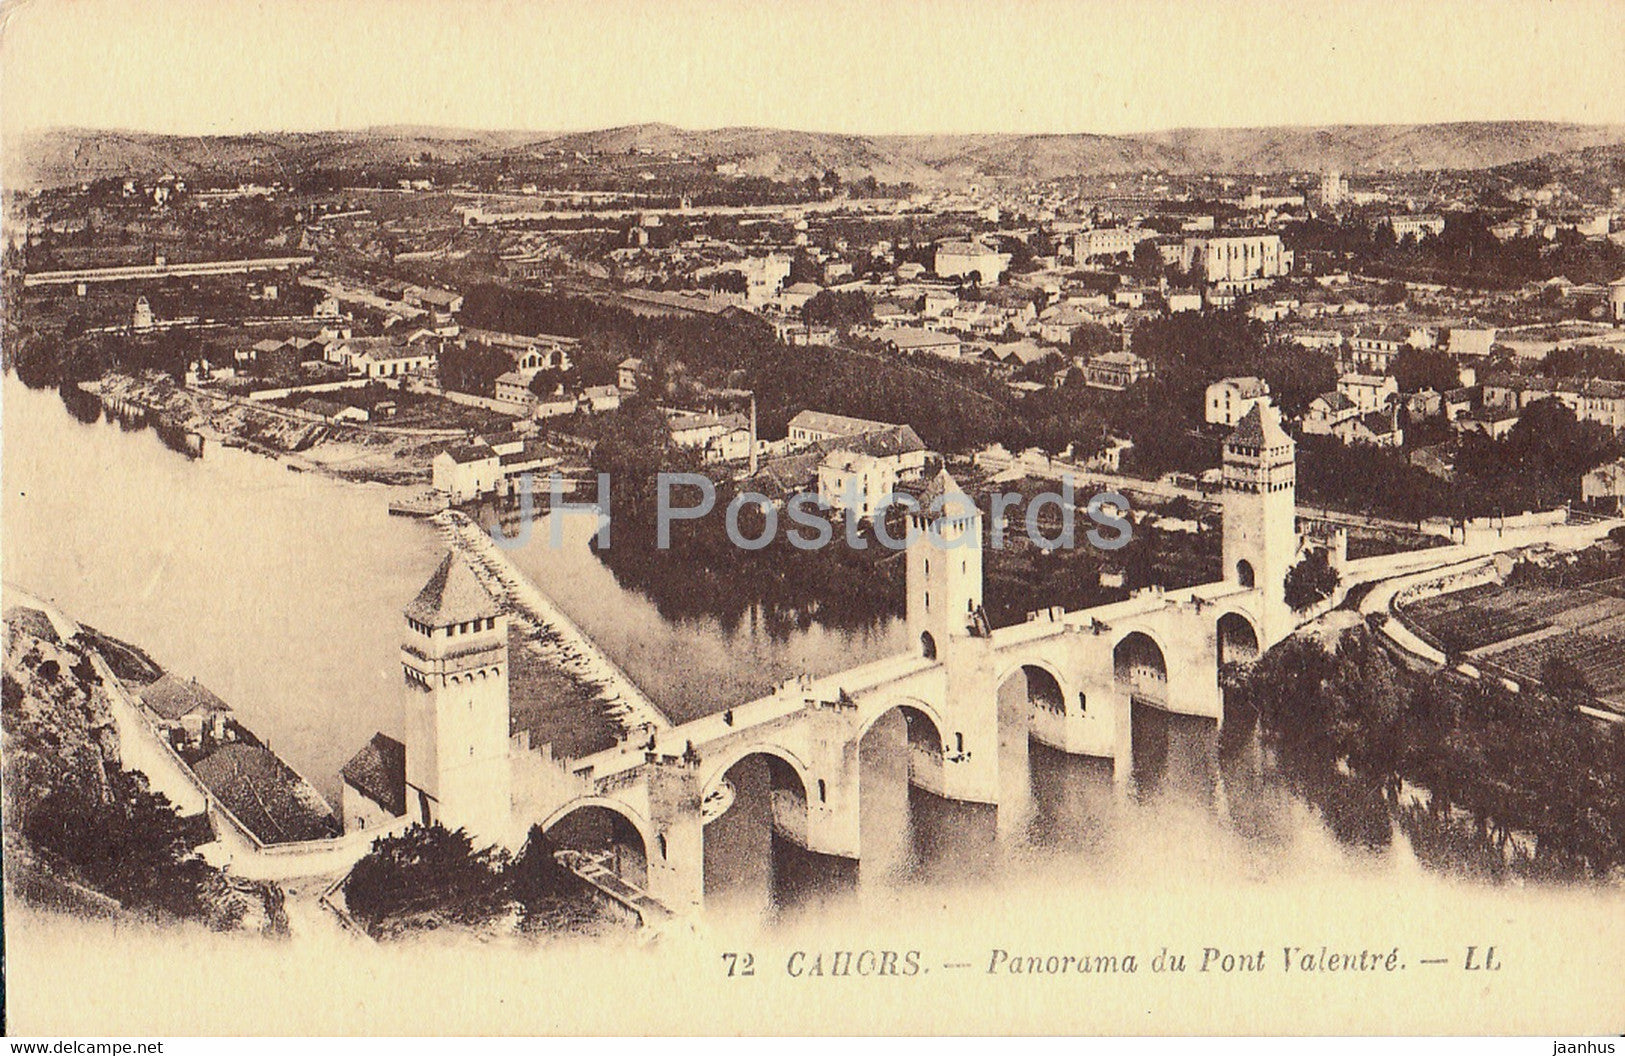 Cahors - Panorama du Pont Valentre - bridge - 72 - old postcard - France - unused - JH Postcards